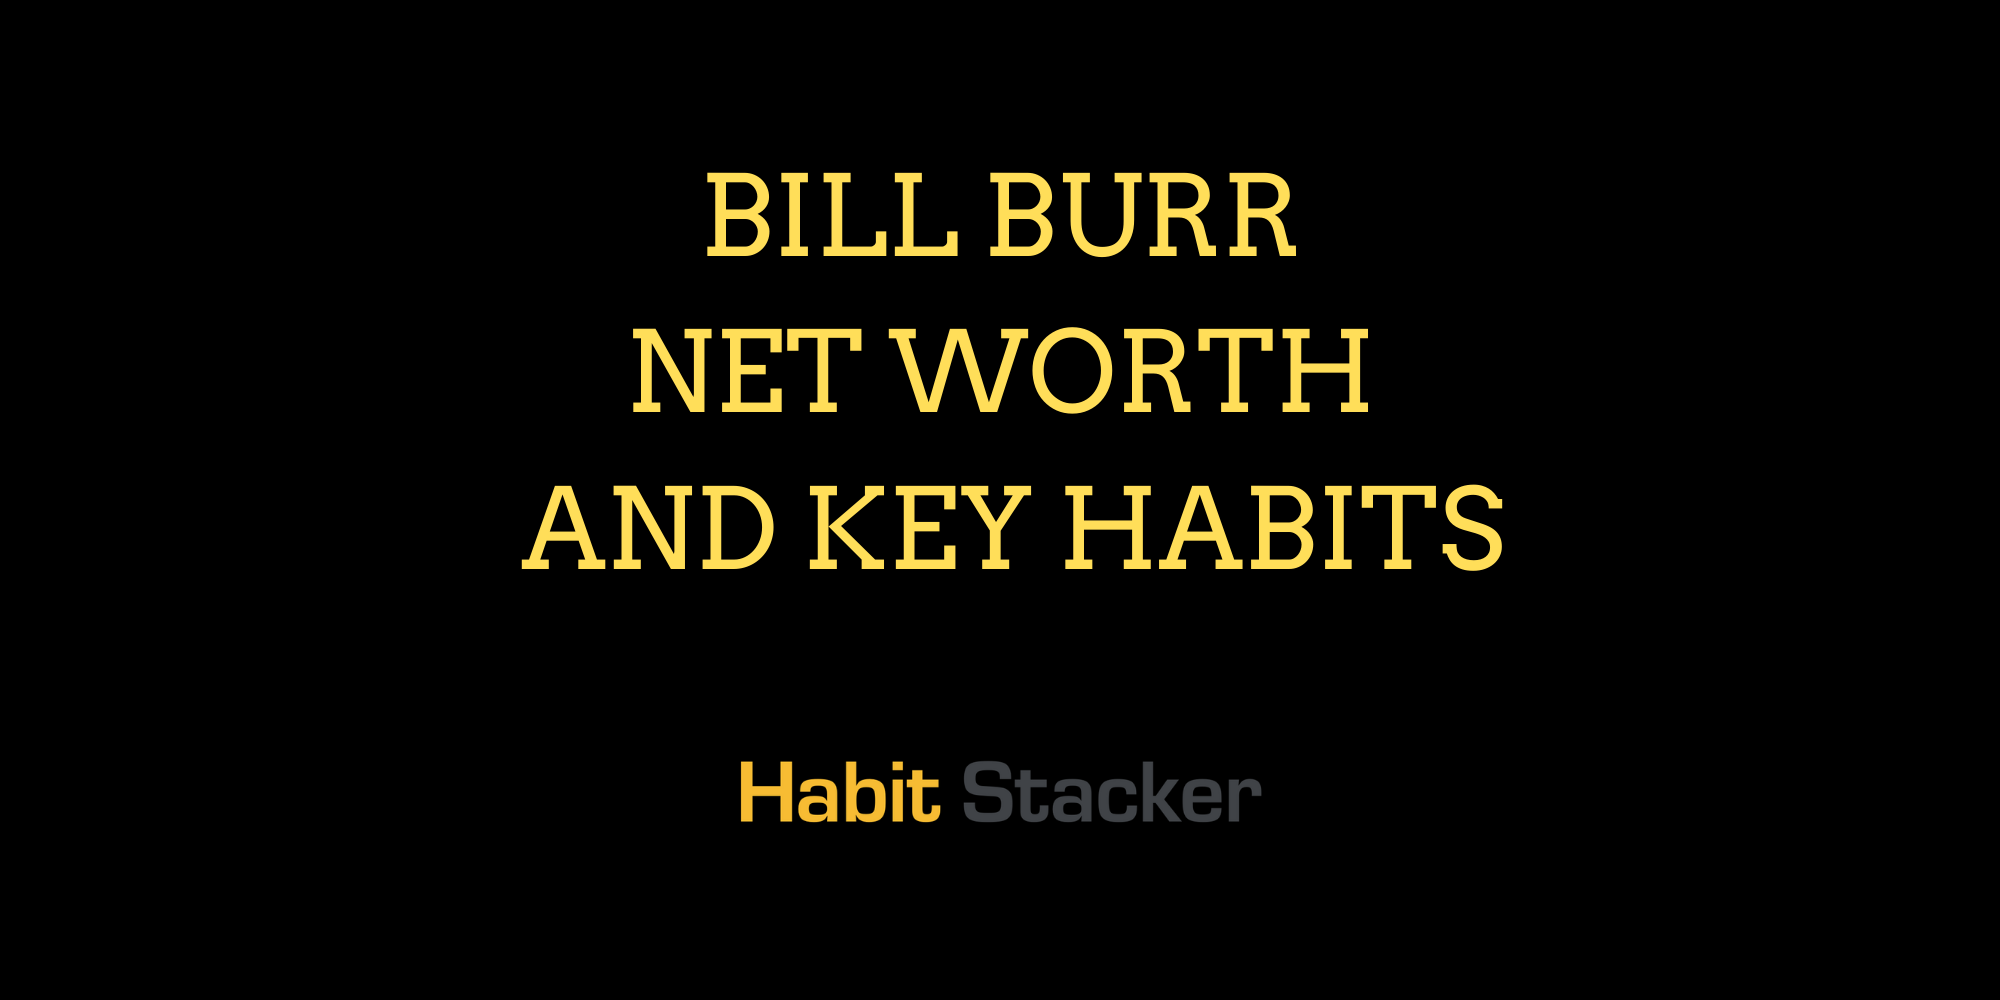 Bill Burr Net Worth and Key Habits